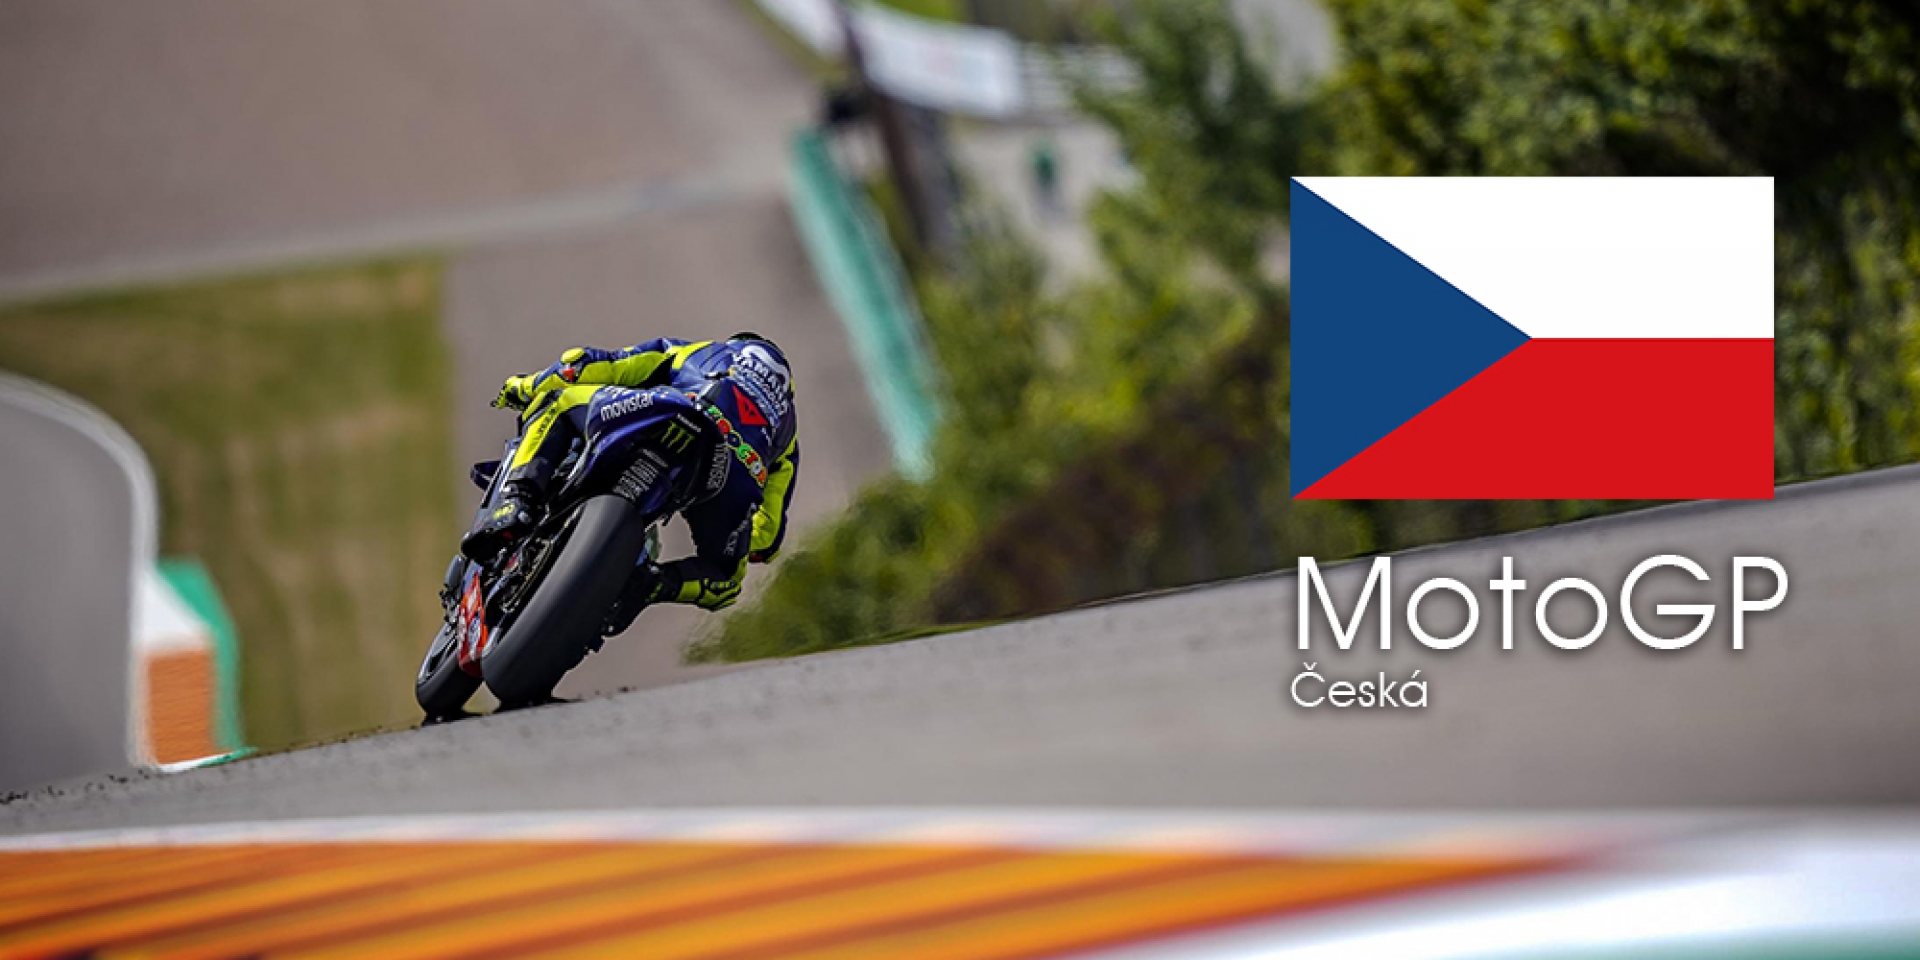 MotoGP 2018 捷克站 轉播時間